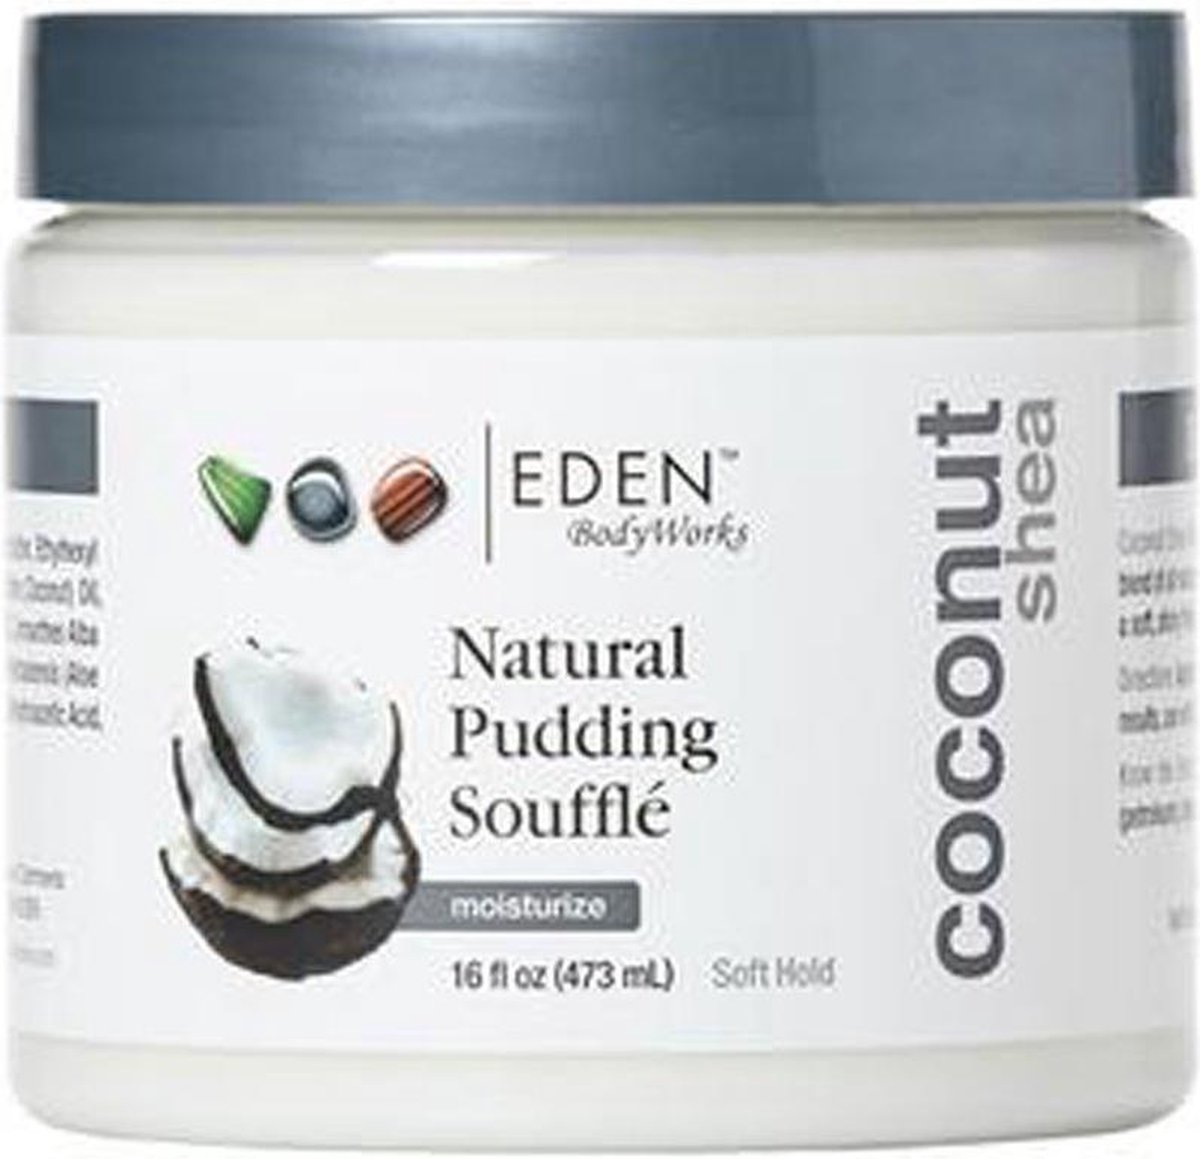 Eden Bodyworks Coconut Shea Pudding Souffle 443 gr